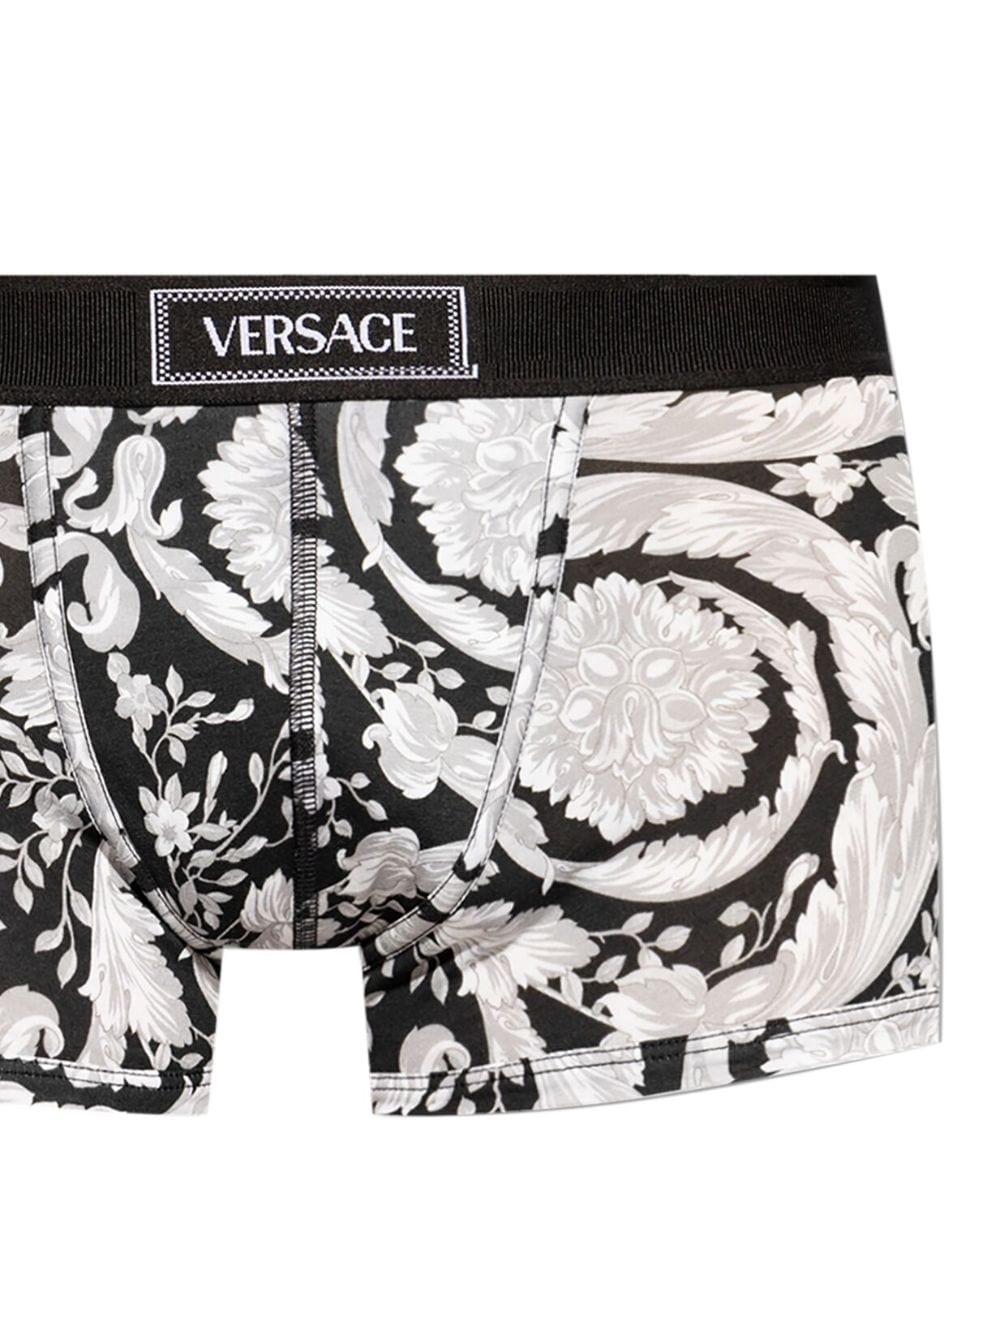 Versace Barocco katoenen boxershorts - Zwart